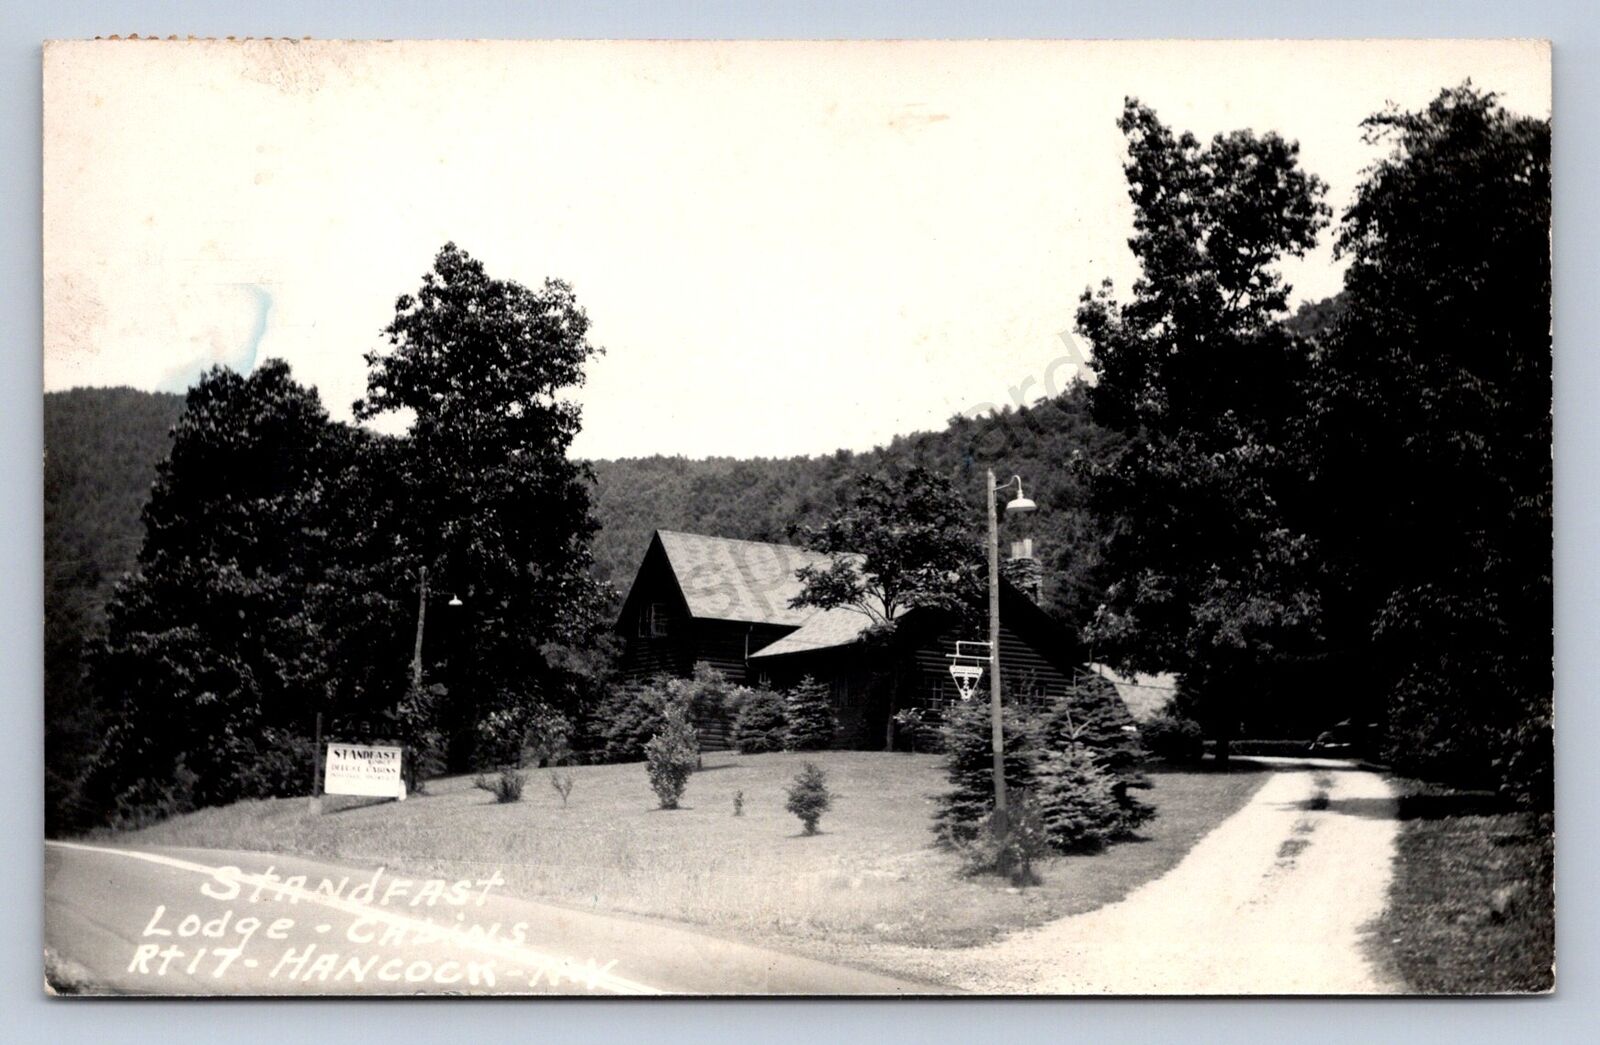 K2/ Hancock New York RPPC Postcard c1940s Standfast Lodge Cabins  265